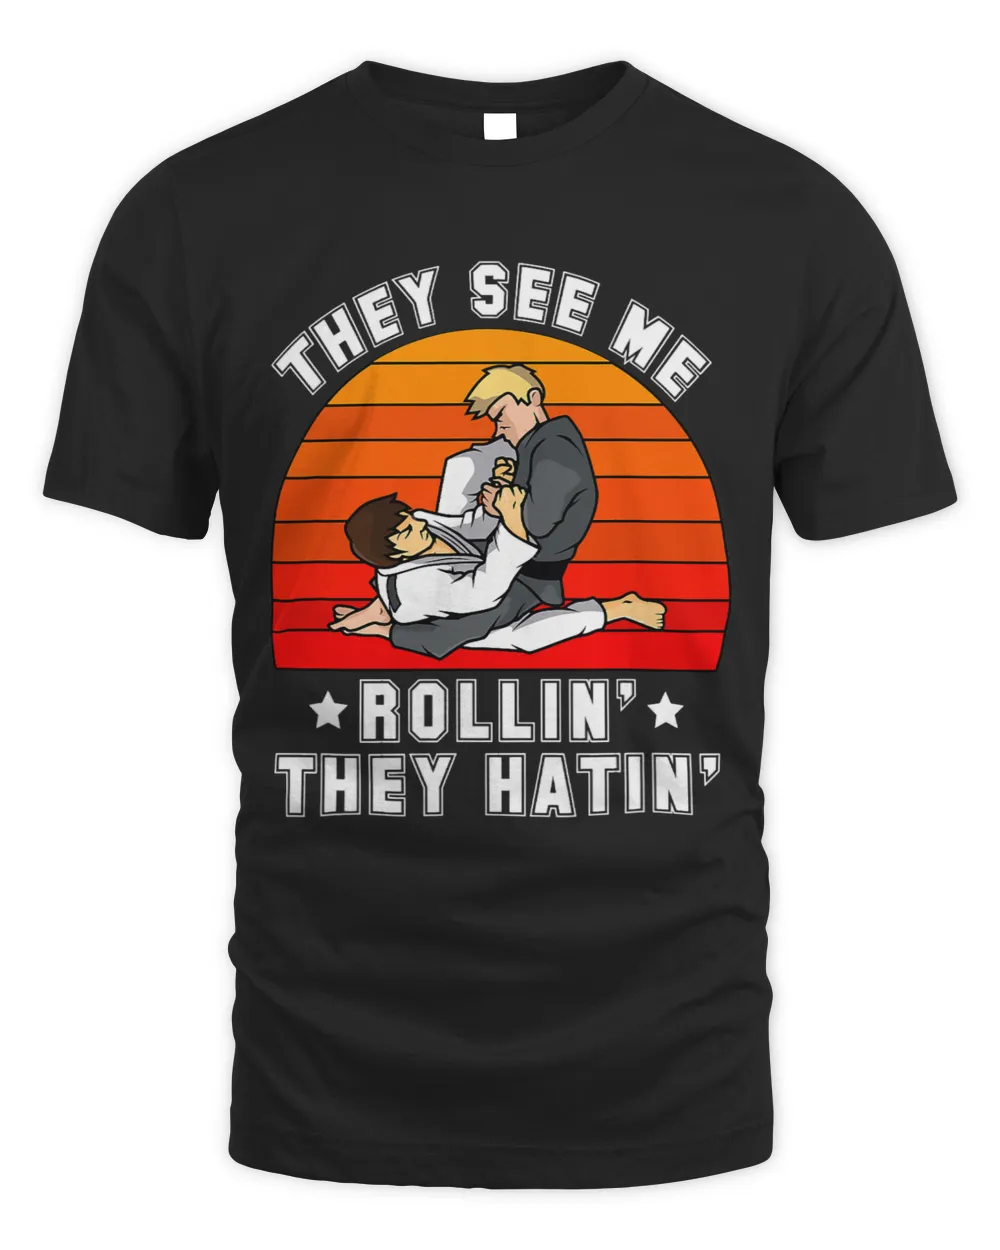 Jiu Jitsu Shirt - They See Me Rollin They Hatin - great gift